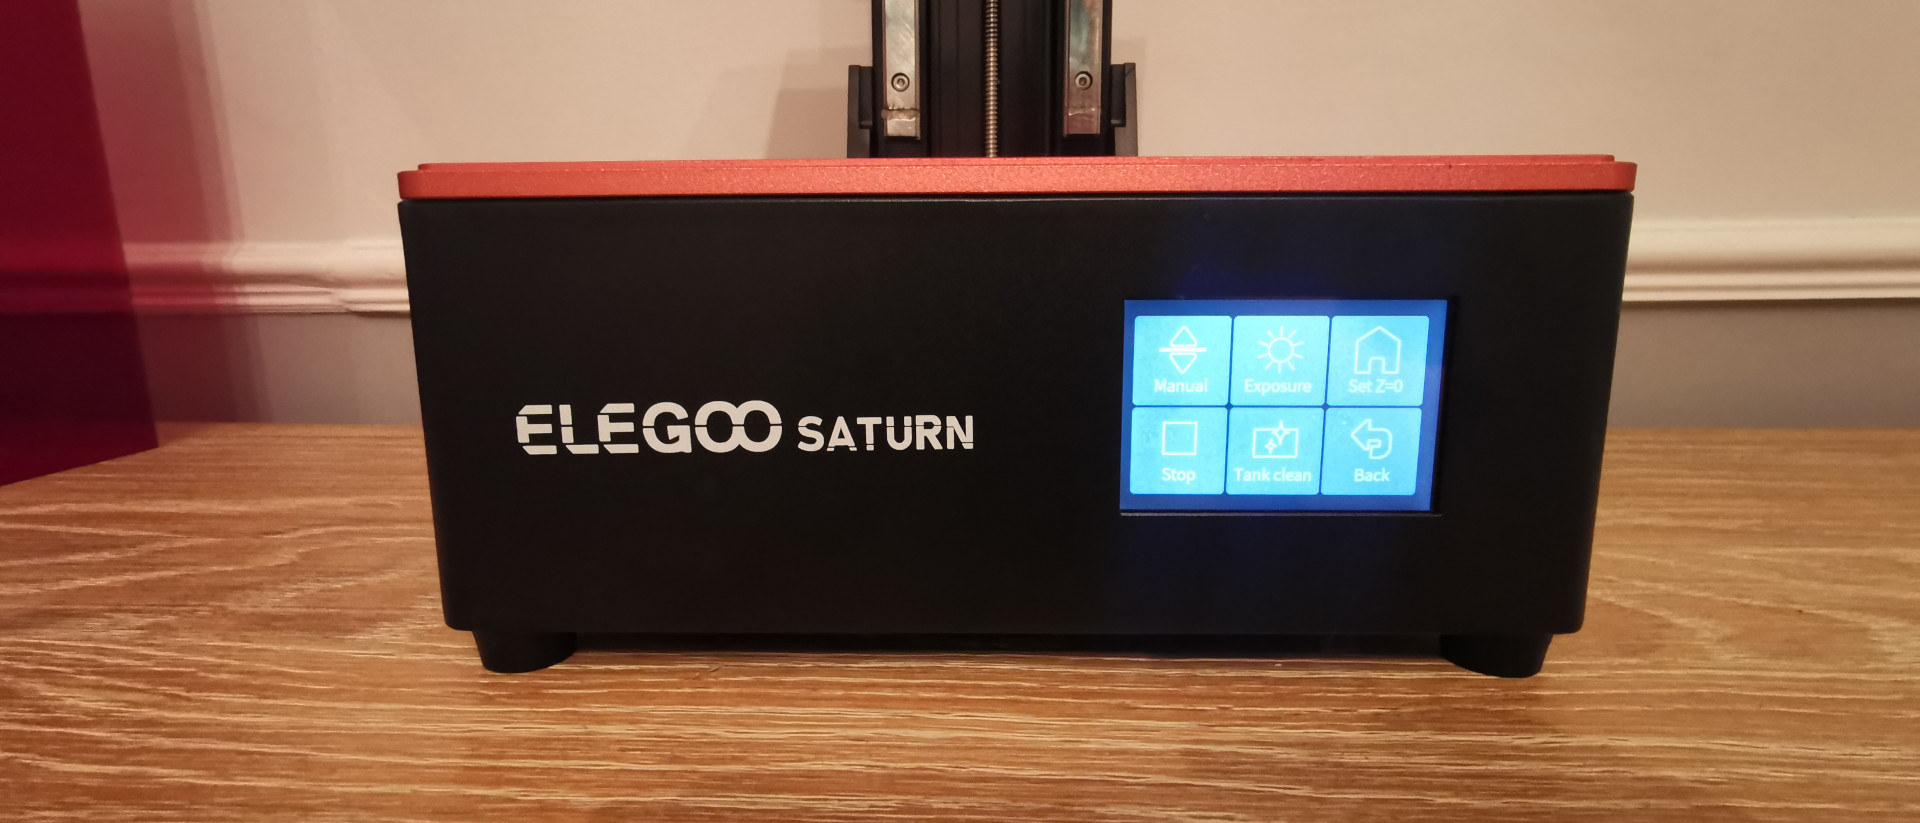 High Quality 3D Prints: Elegoo Saturn S for 4K resolution! Unboxing & Setup  